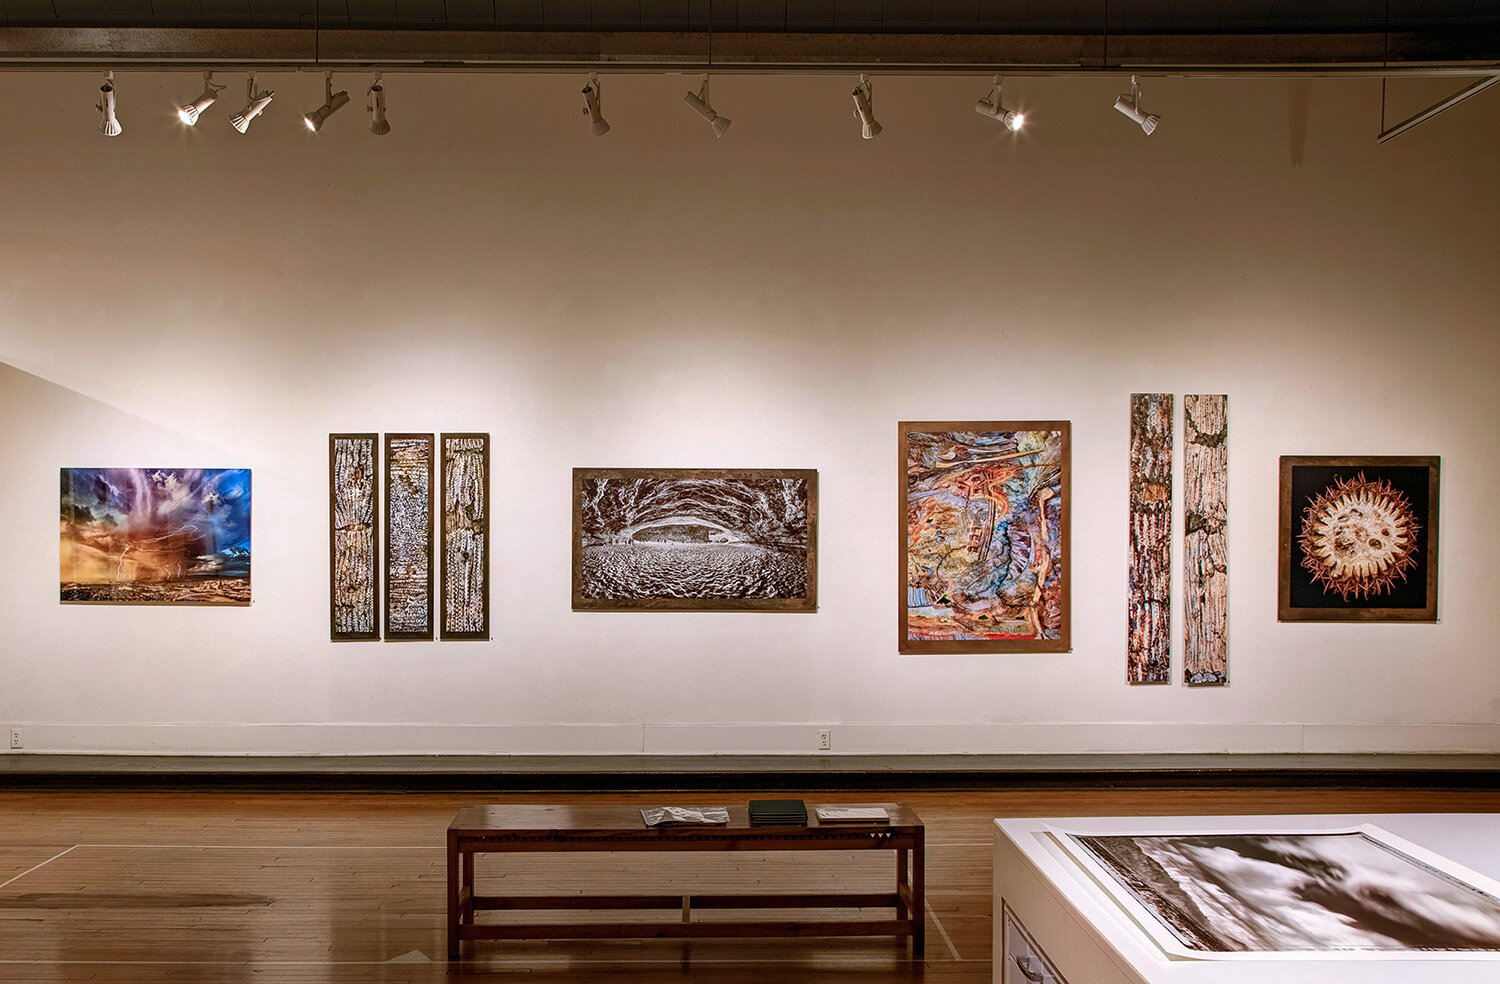 William Lesch Gallery Exhibit at Etherton Gallery, Tucson, AZ